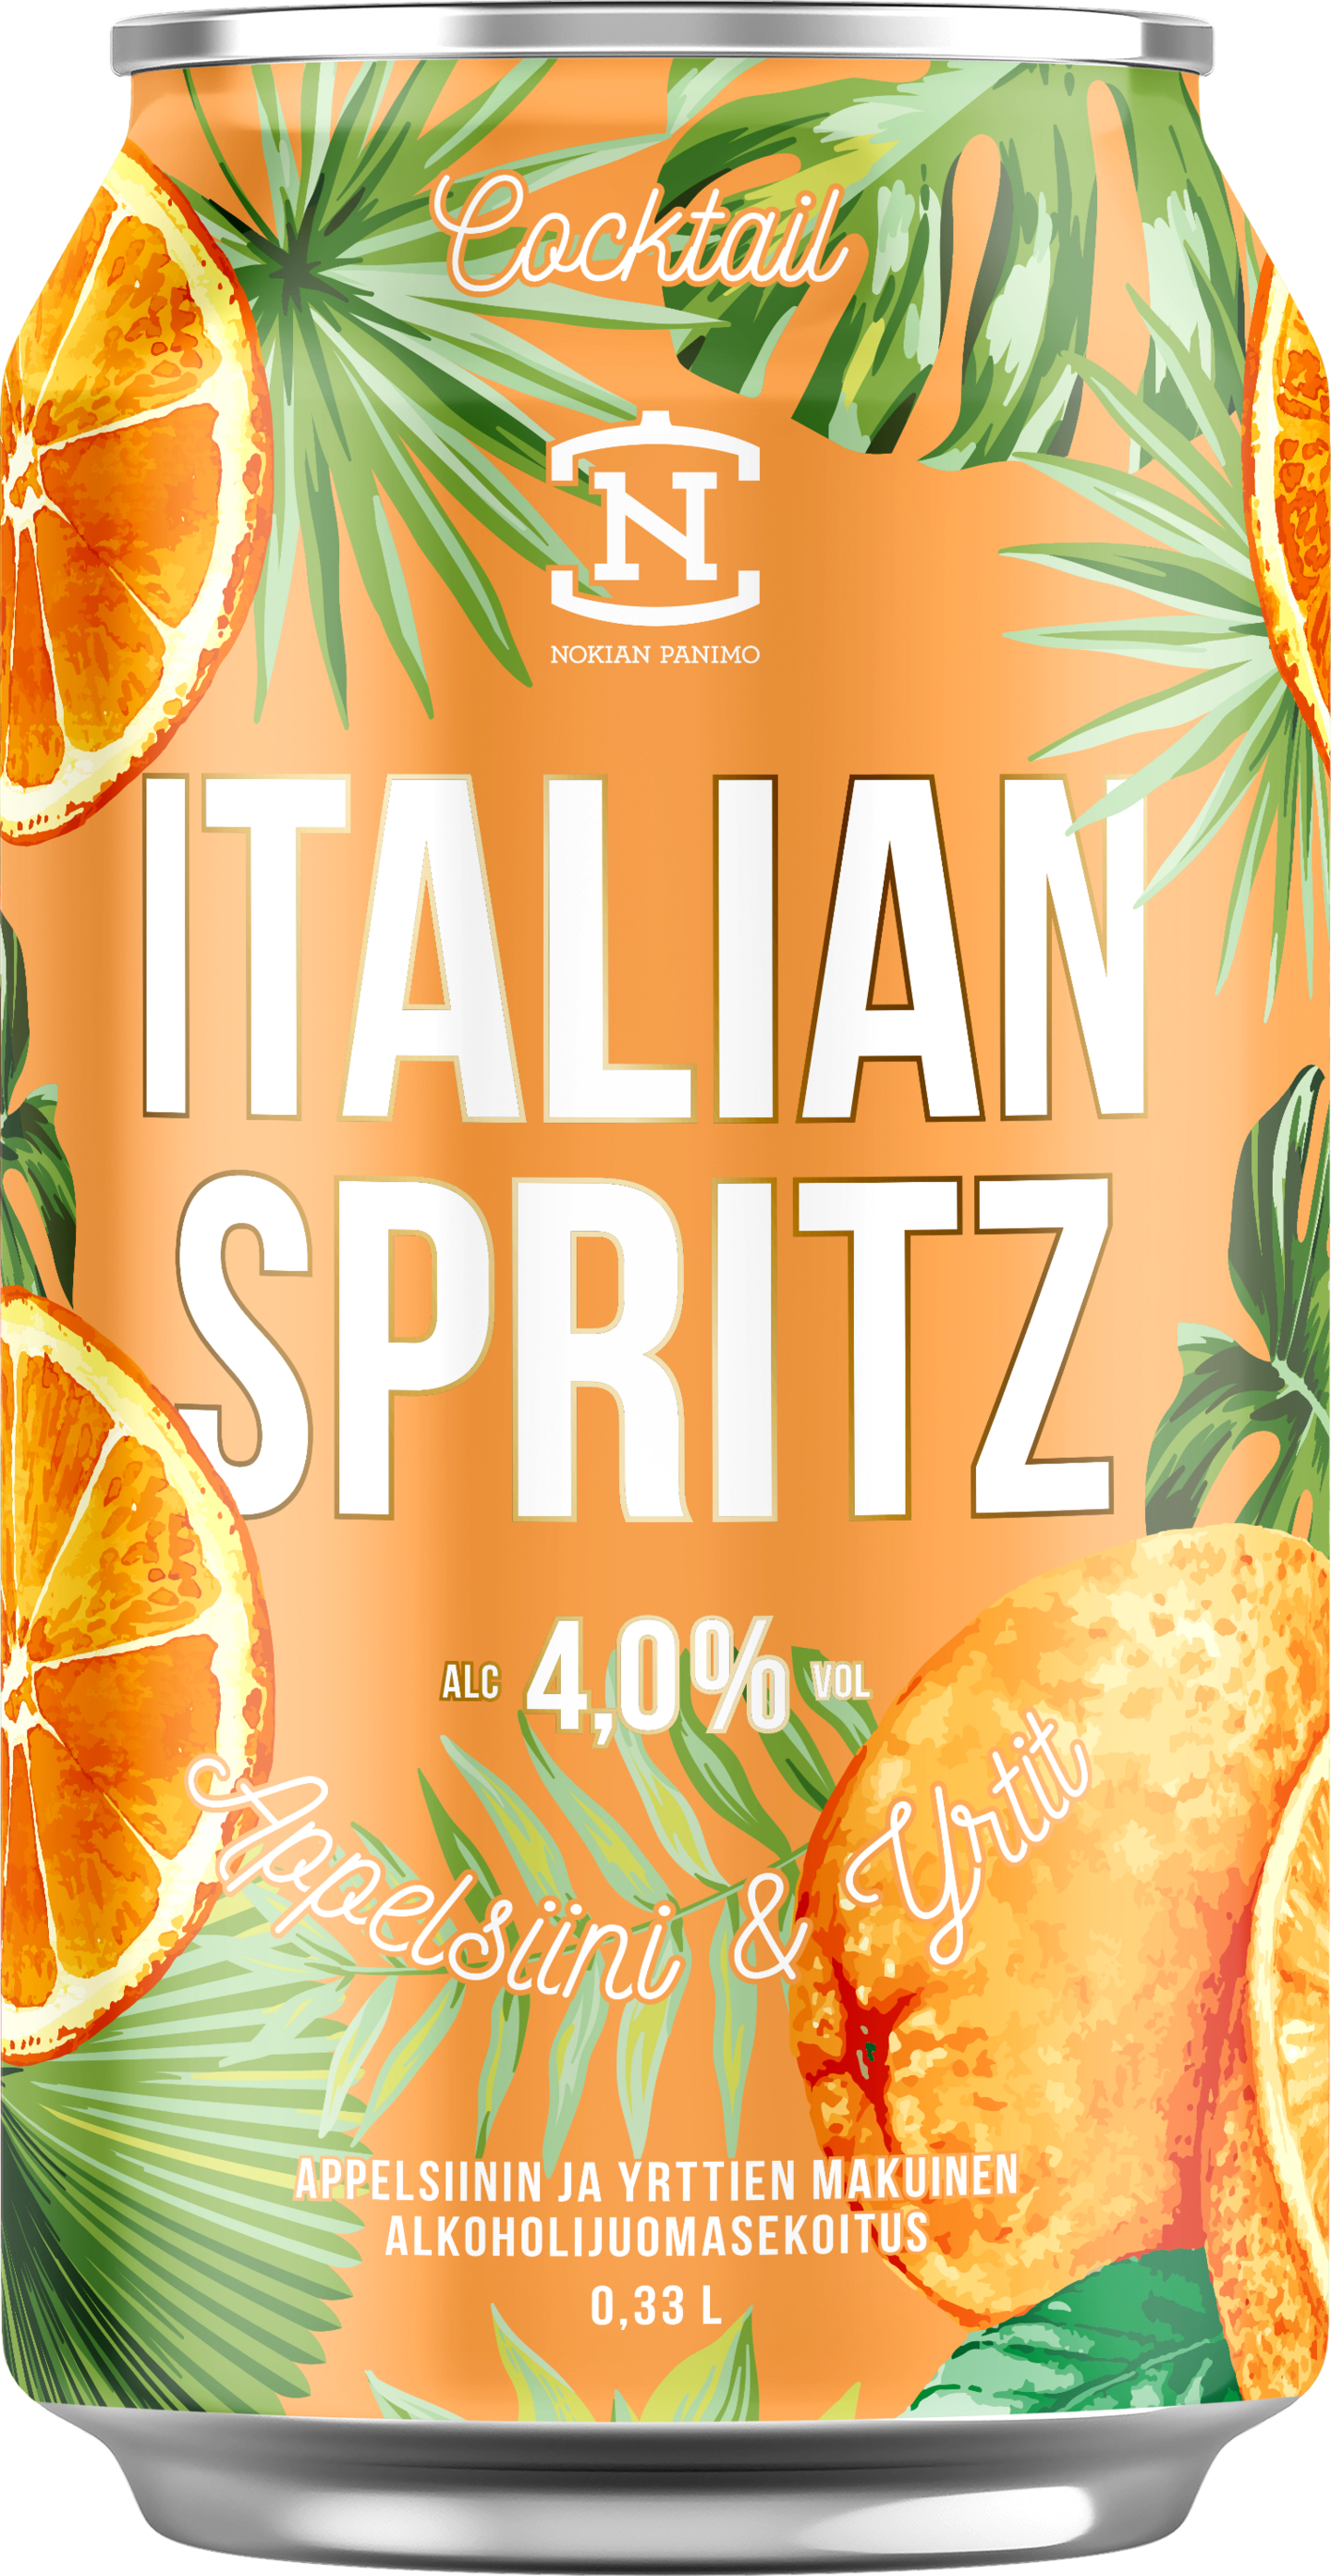 Nokian Panimo Cocktail Italian Spritz appelsiini-yrtit 4% 0,33l